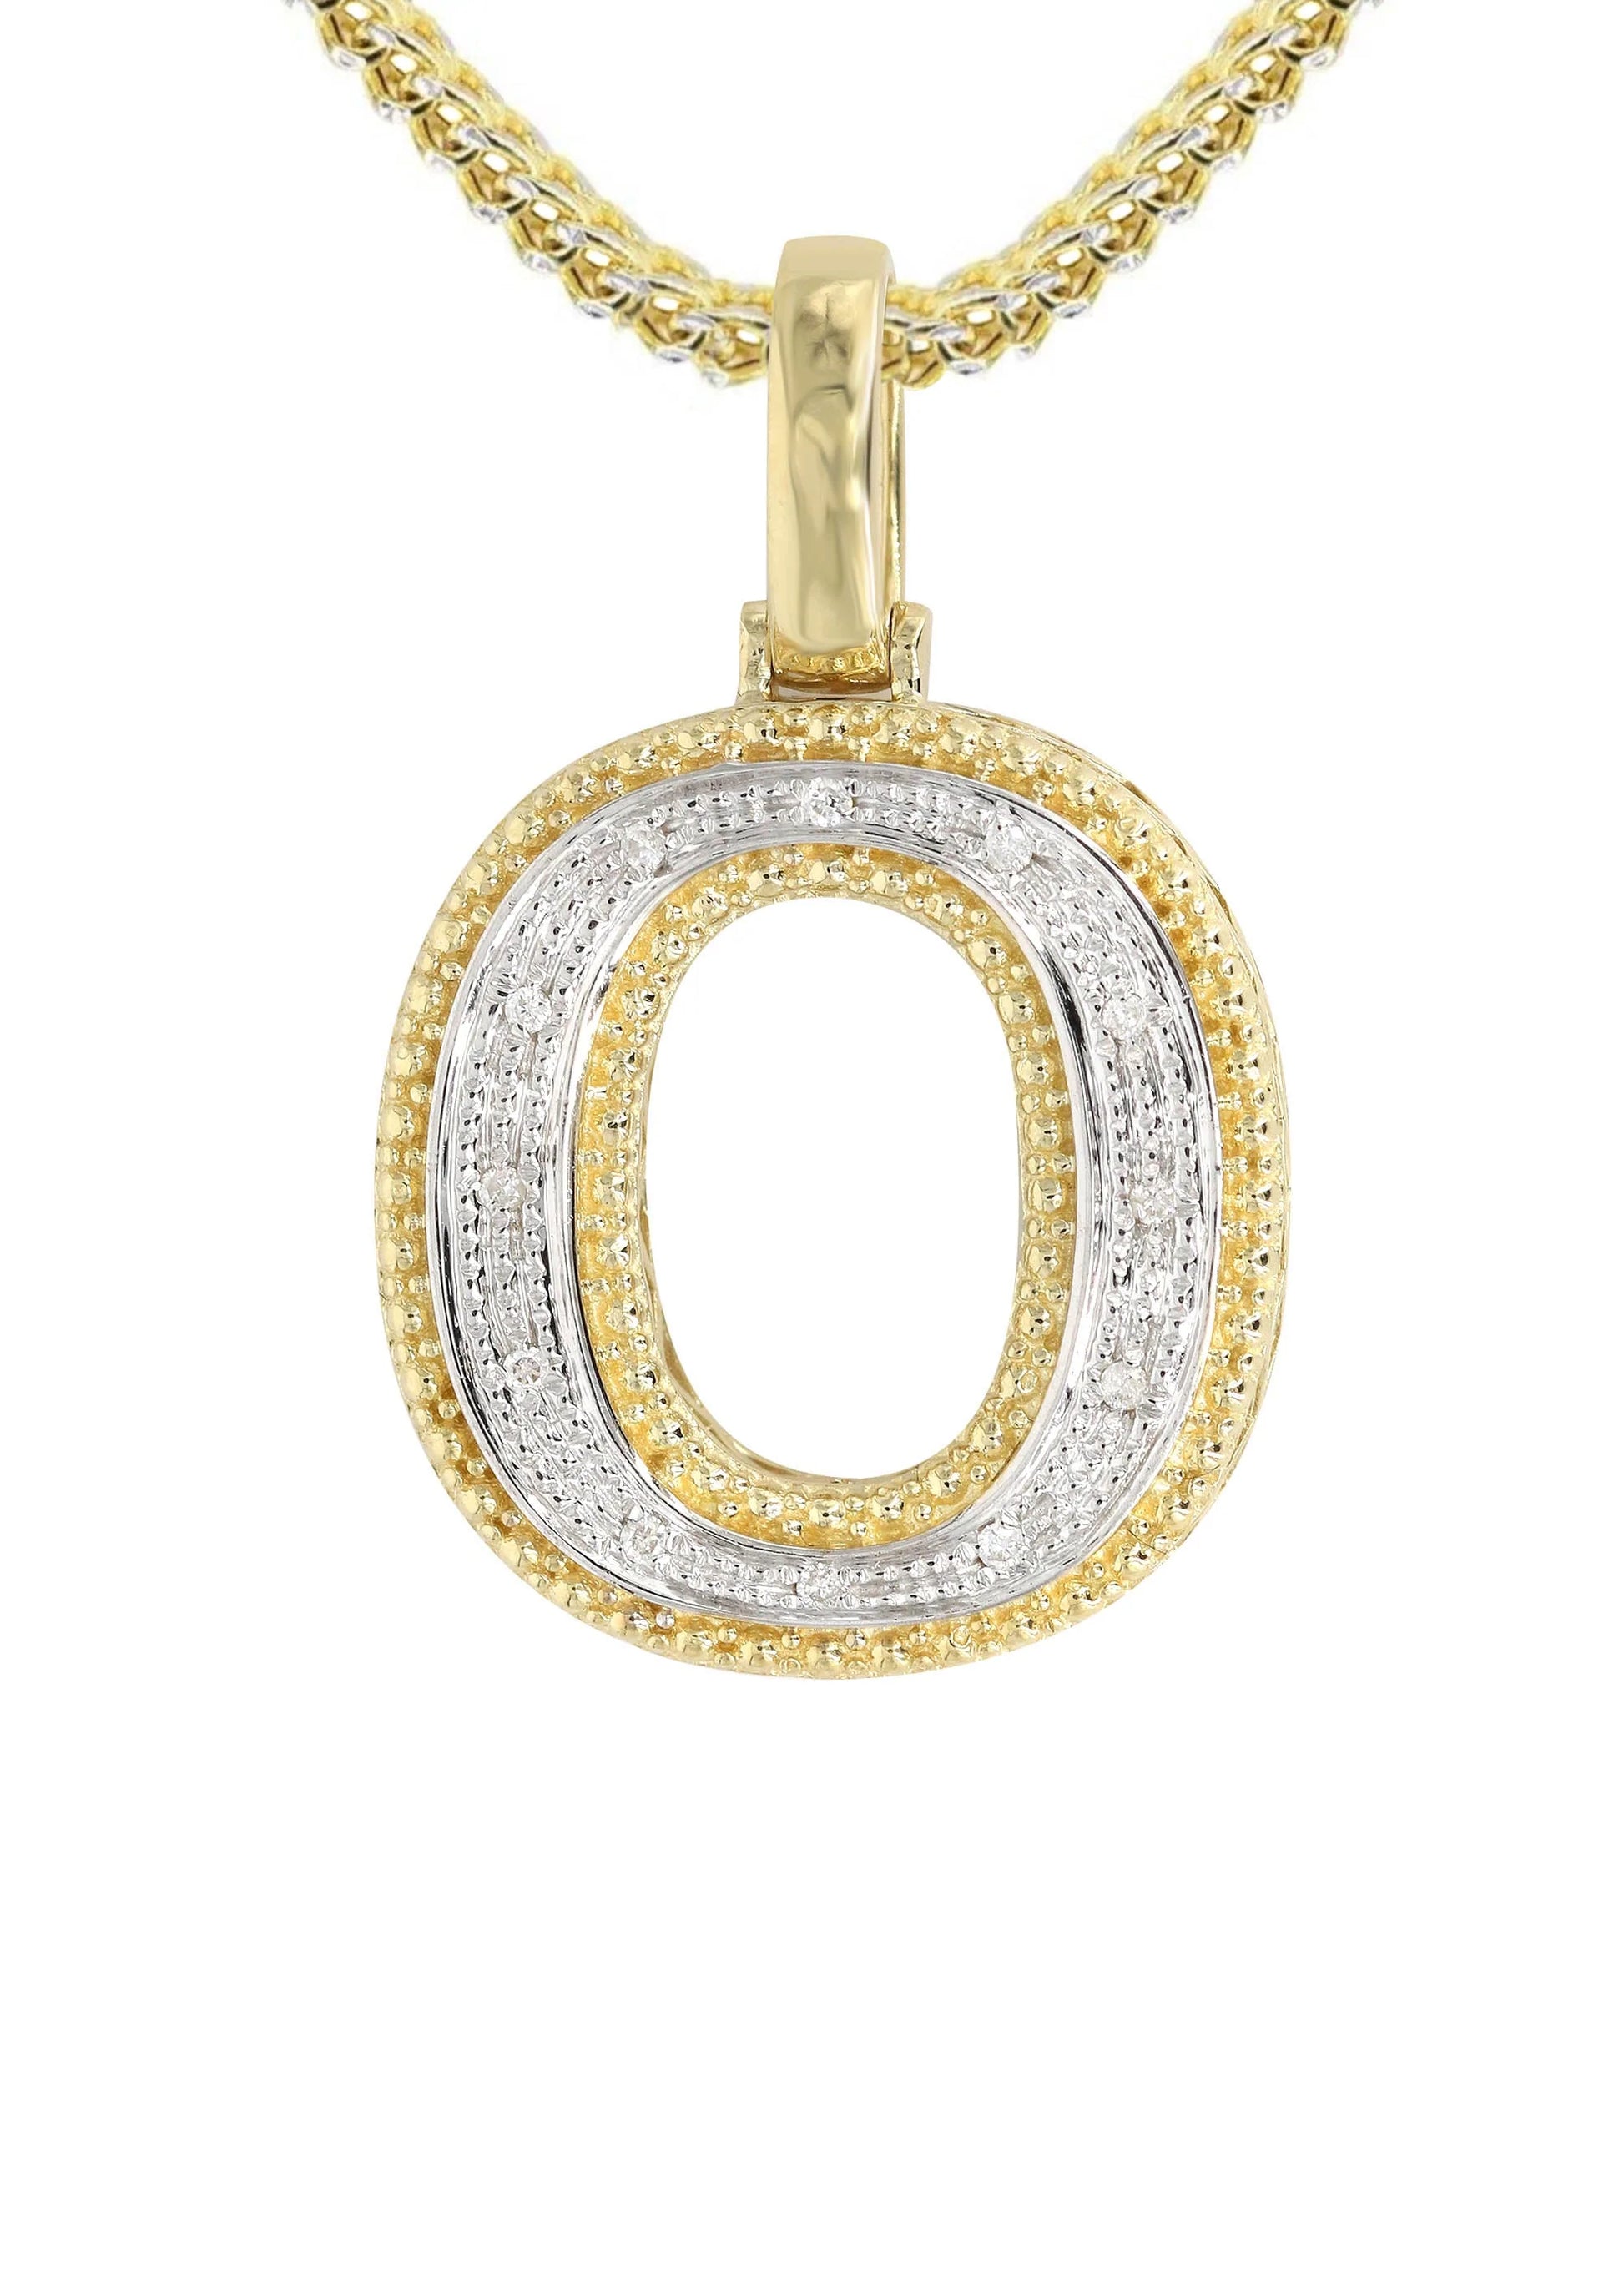 10k Yellow Gold Diamond Pendant Letter "O"